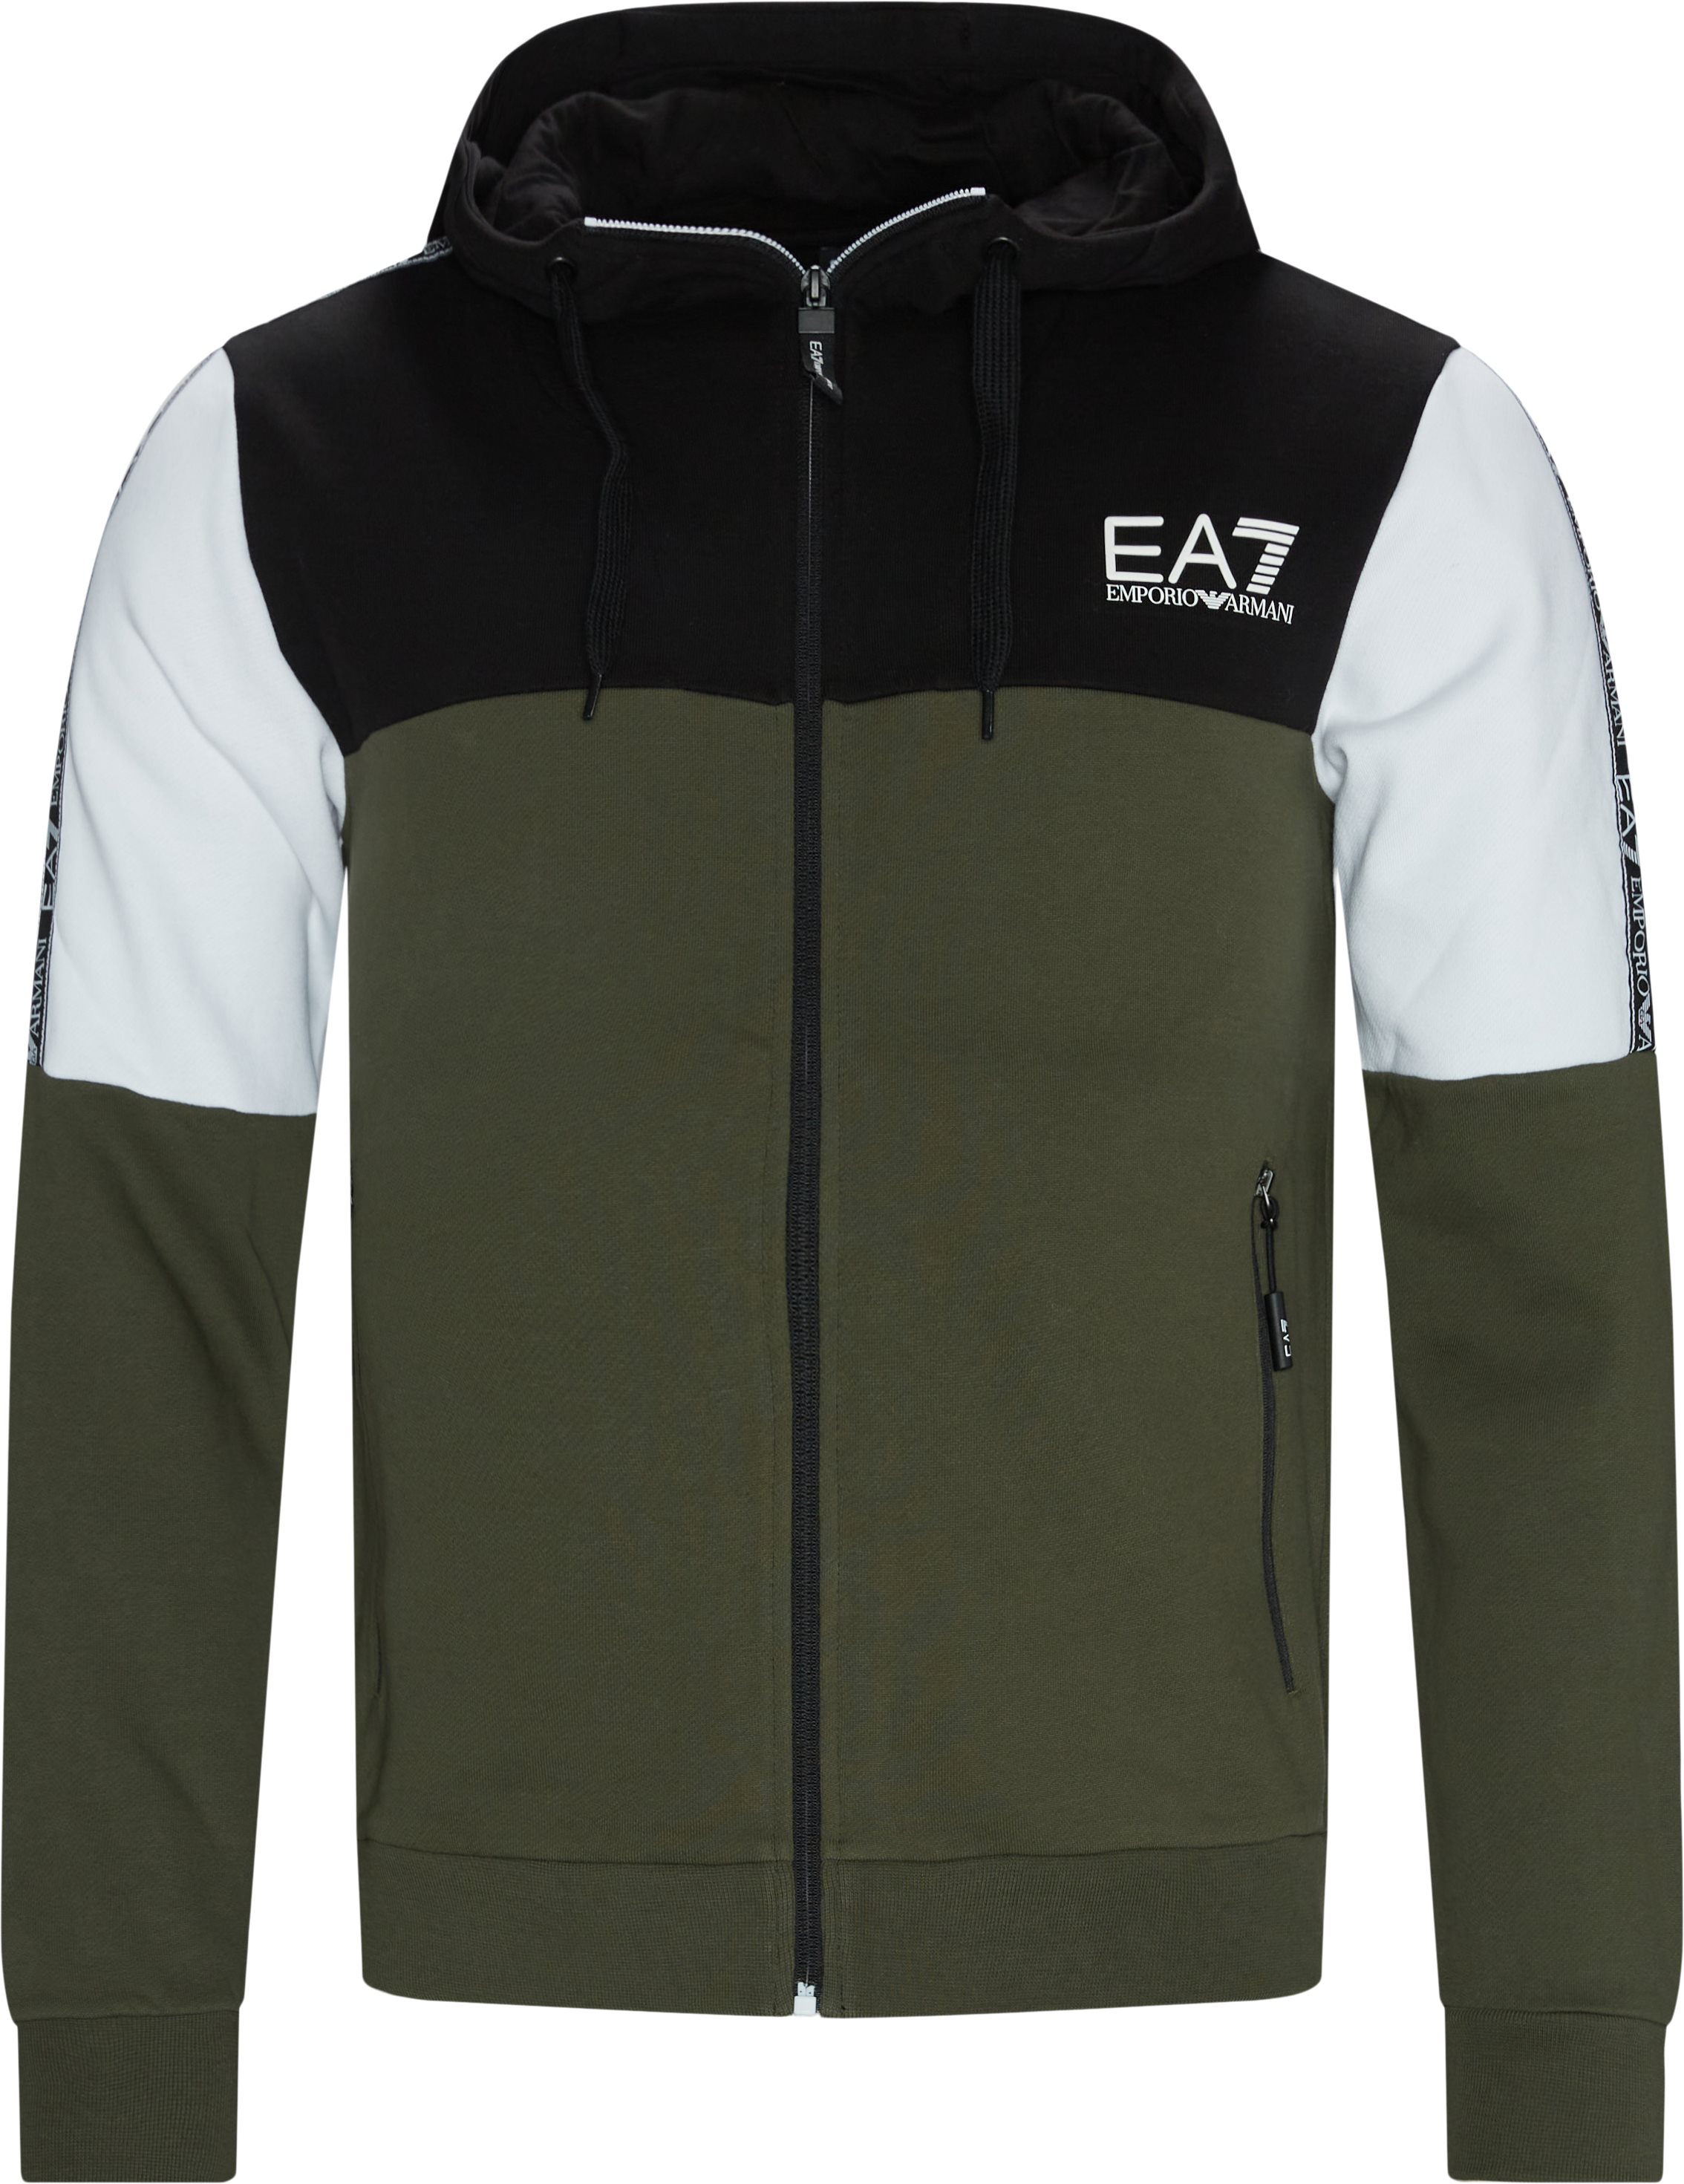 Pj07z-6kpv63 Zip Sweatshirt - Sweatshirts - Regular fit - Grön